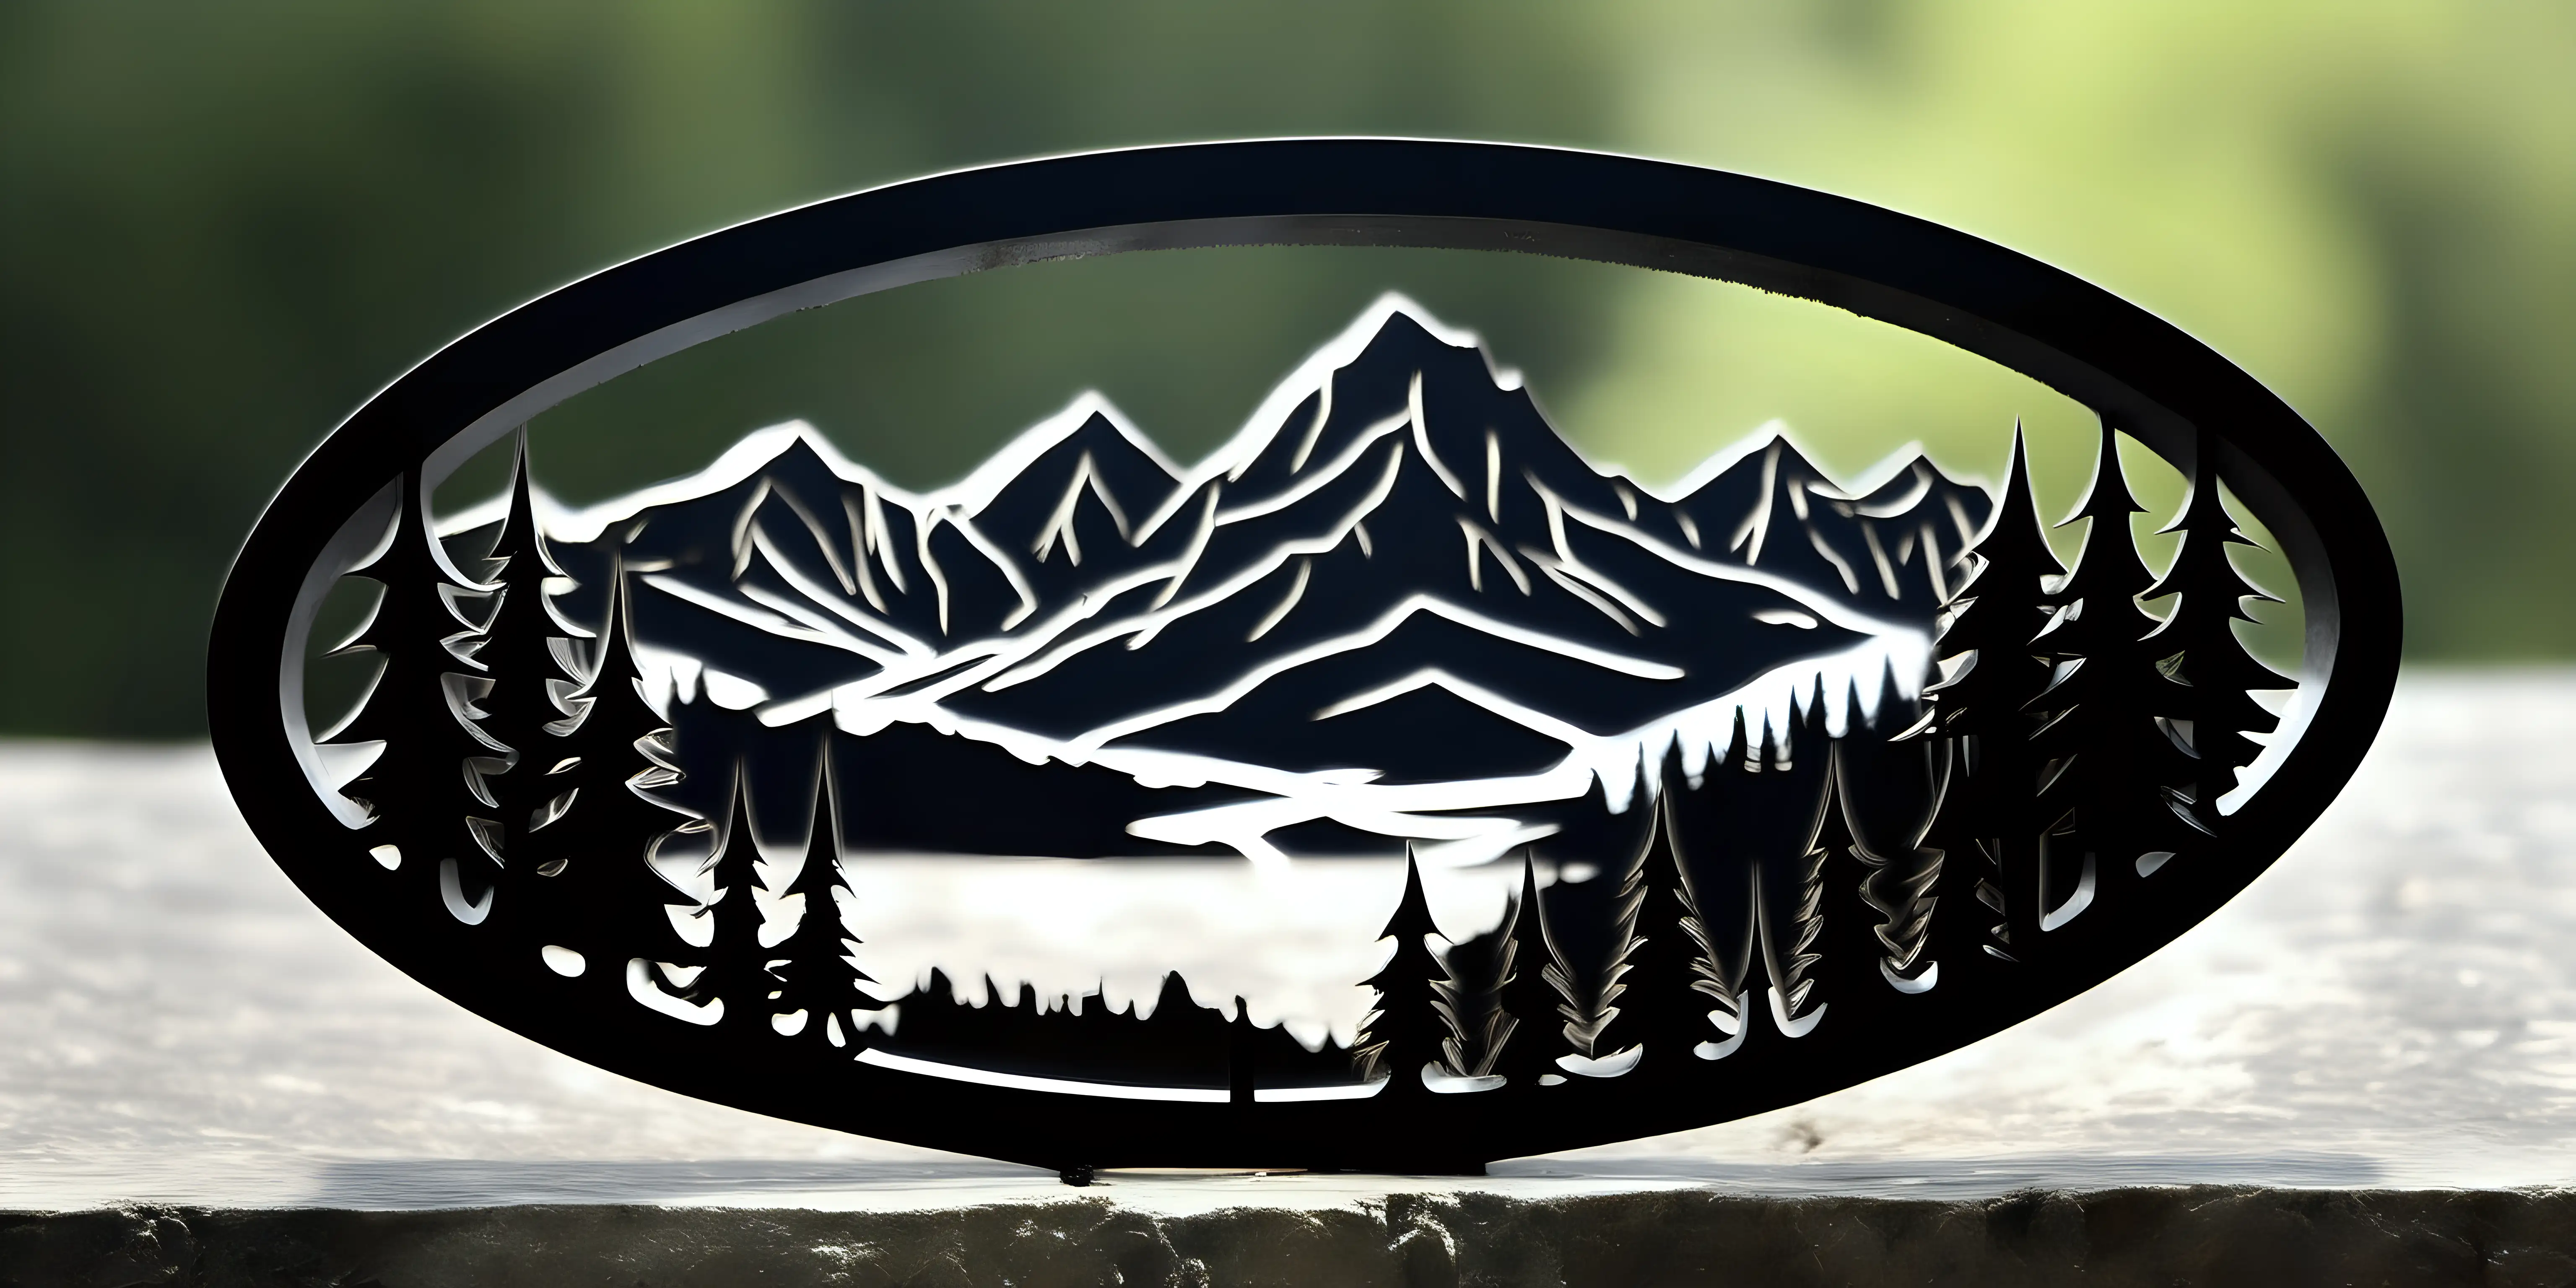 Plasma Cut Black Steel Oval with Mountain Silhouette Art